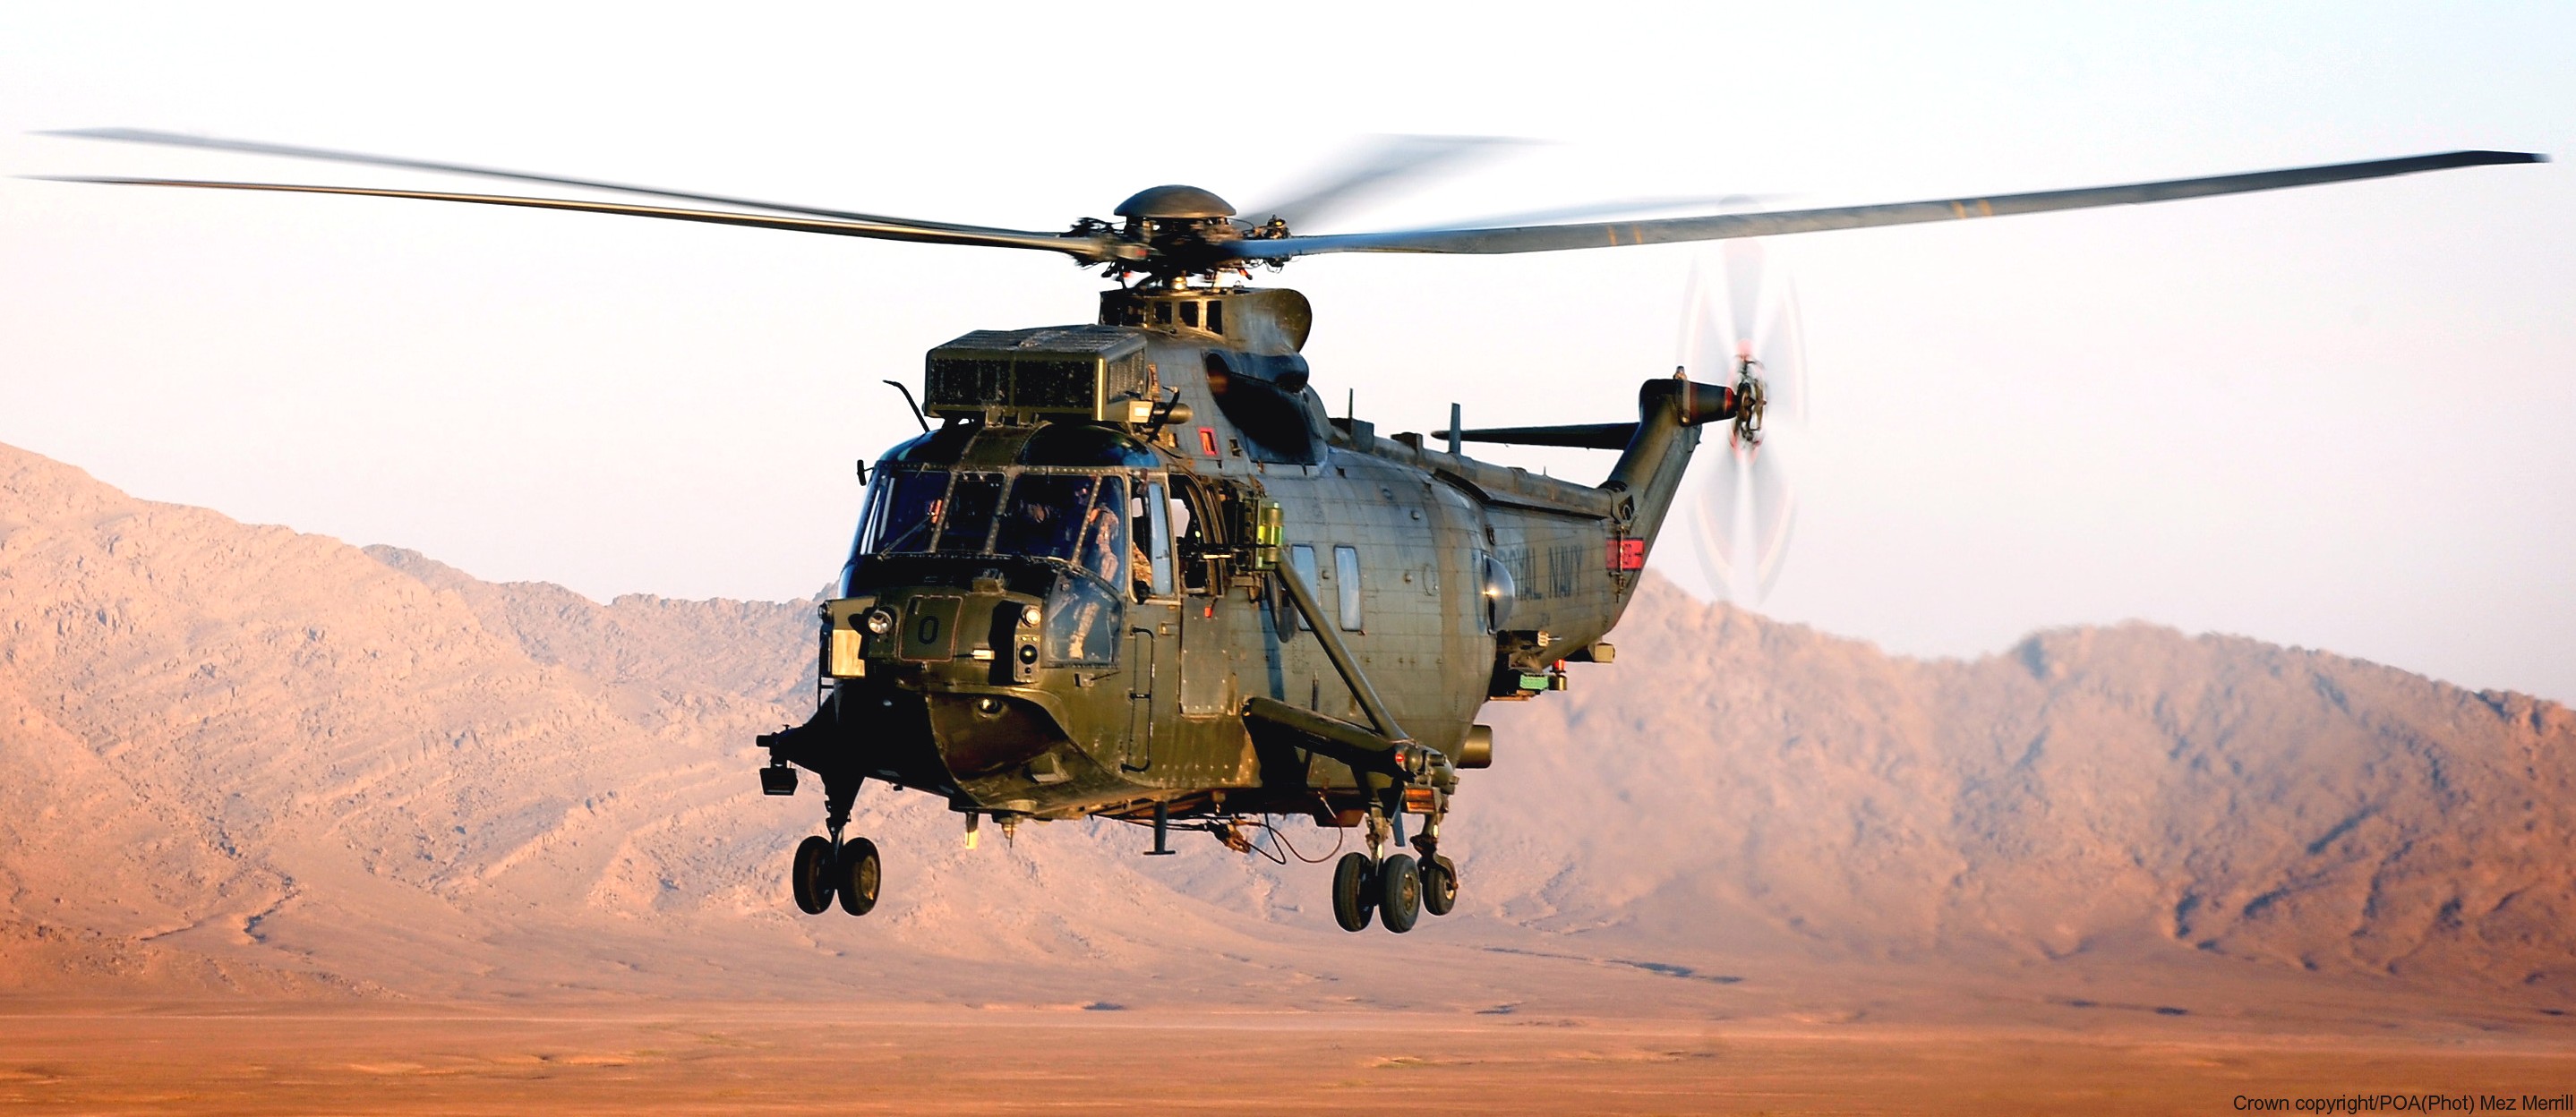 sea king hc.4 helicopter royal navy commando assault marines westland nas squadron rnas 42 afghanistan war